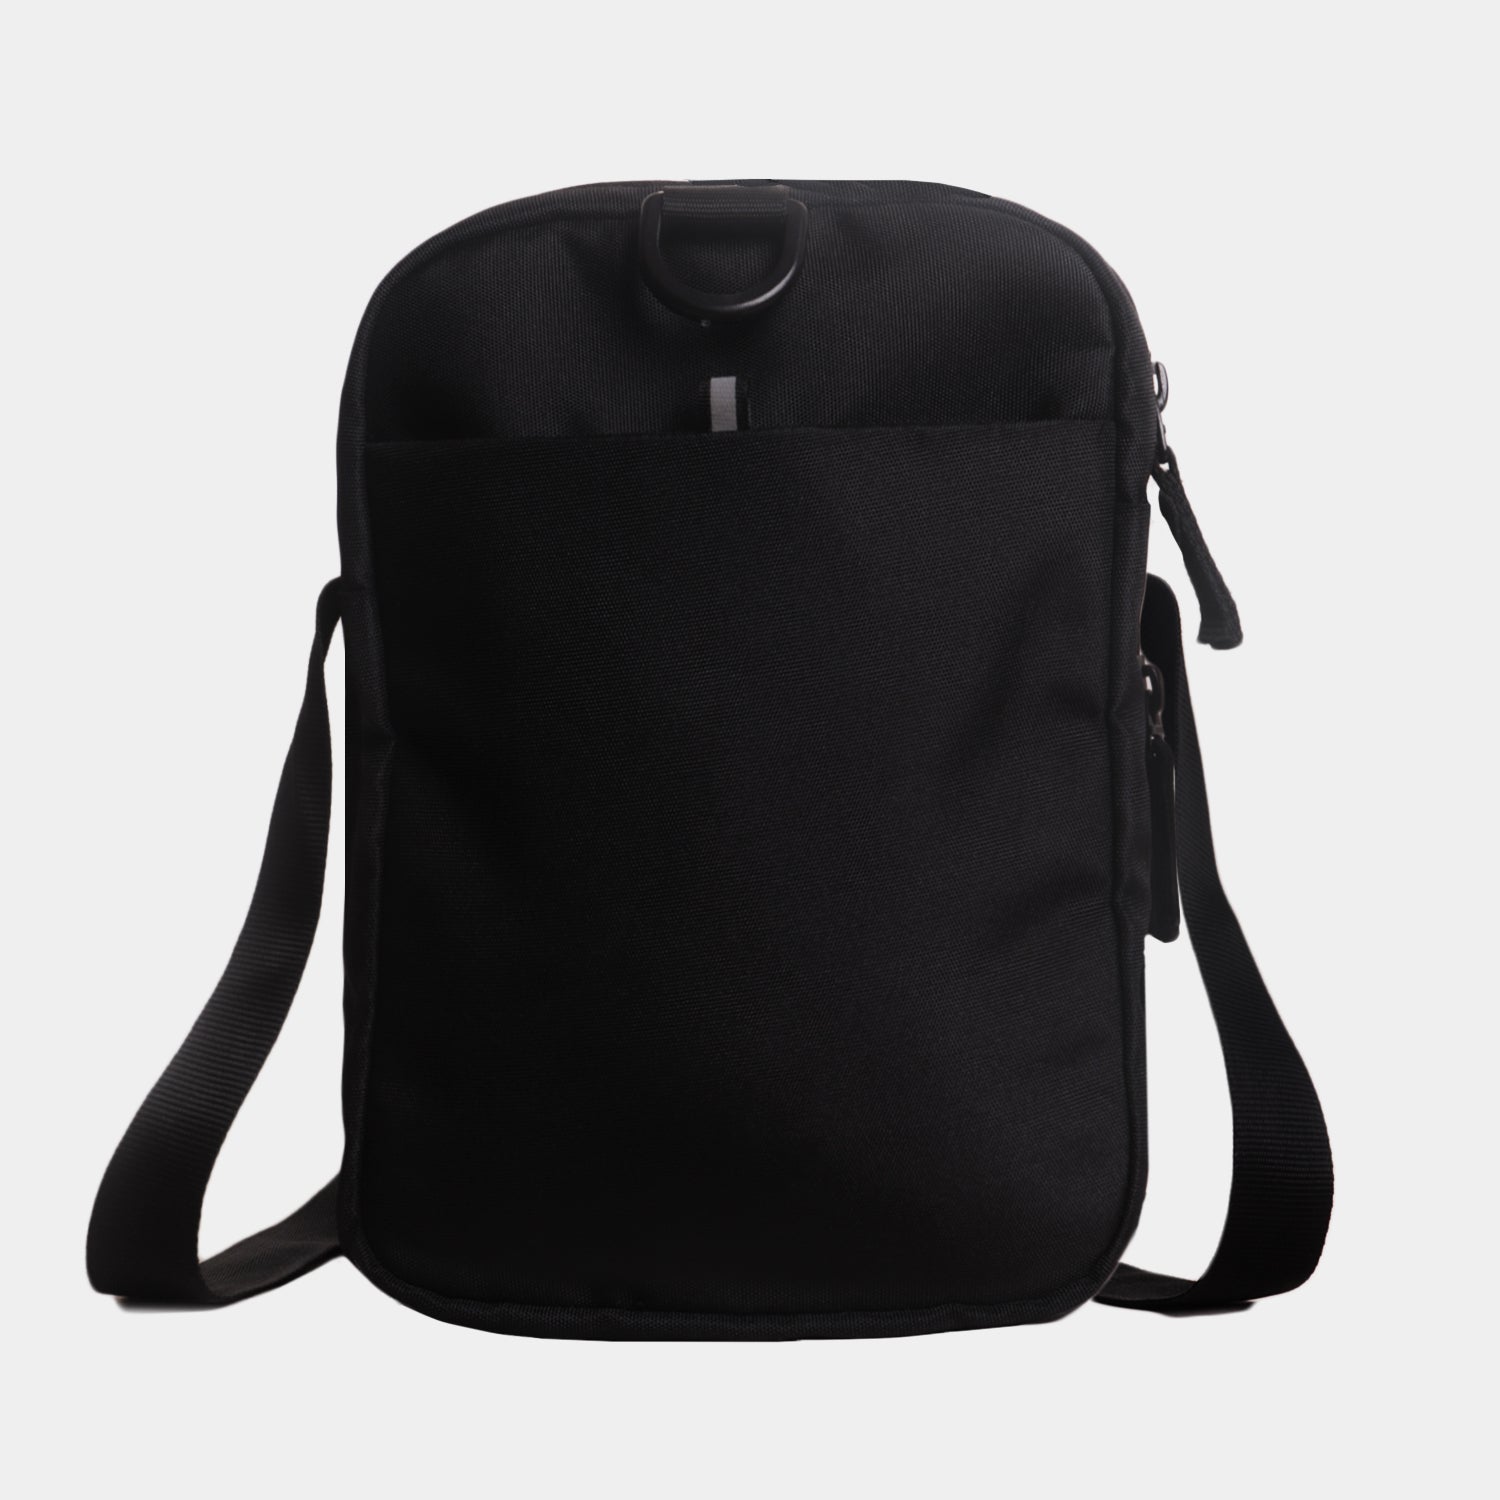 Sling Bag Crossbody bag by Supervek | Streetwear for Men and Women, Classic Black